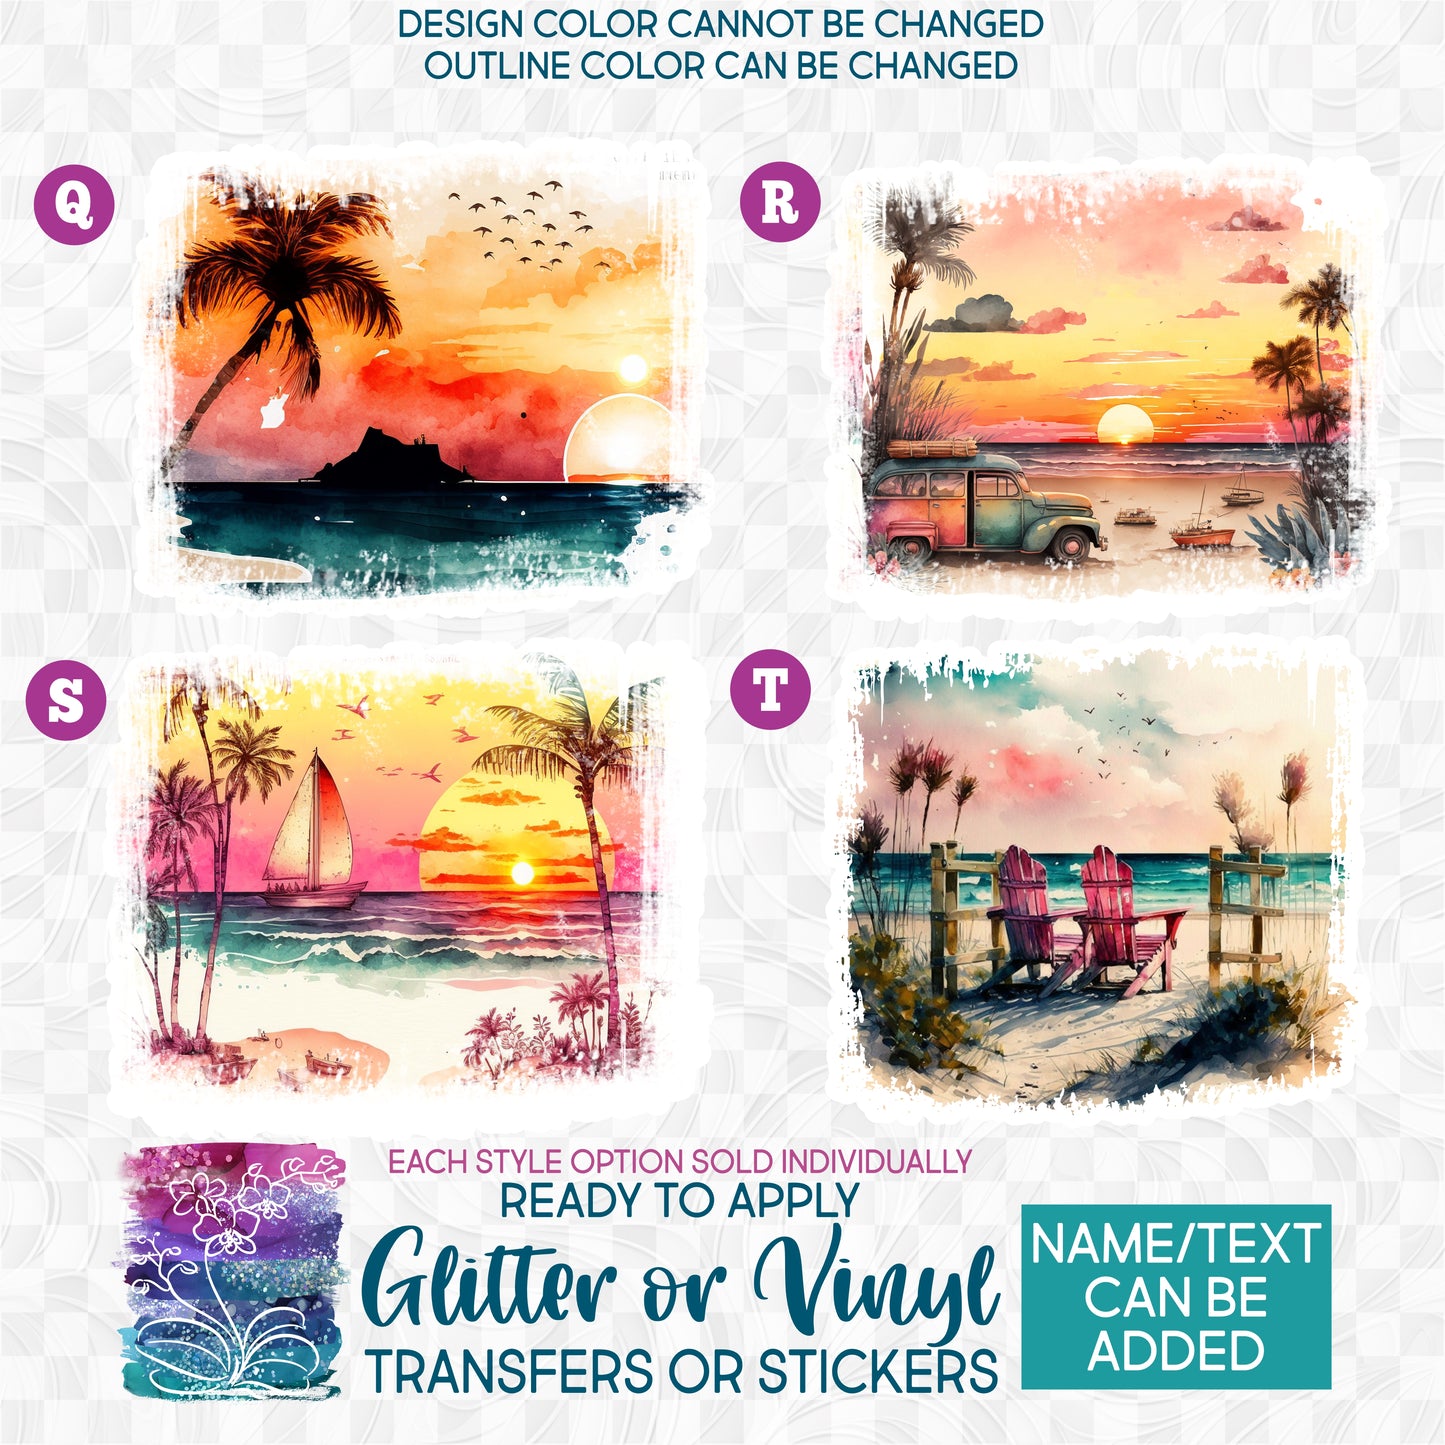 (s204-4) Watercolor Sunset Beach Ocean Tropical Seascape Landscape Glitter or Vinyl Iron-On Transfer or Sticker